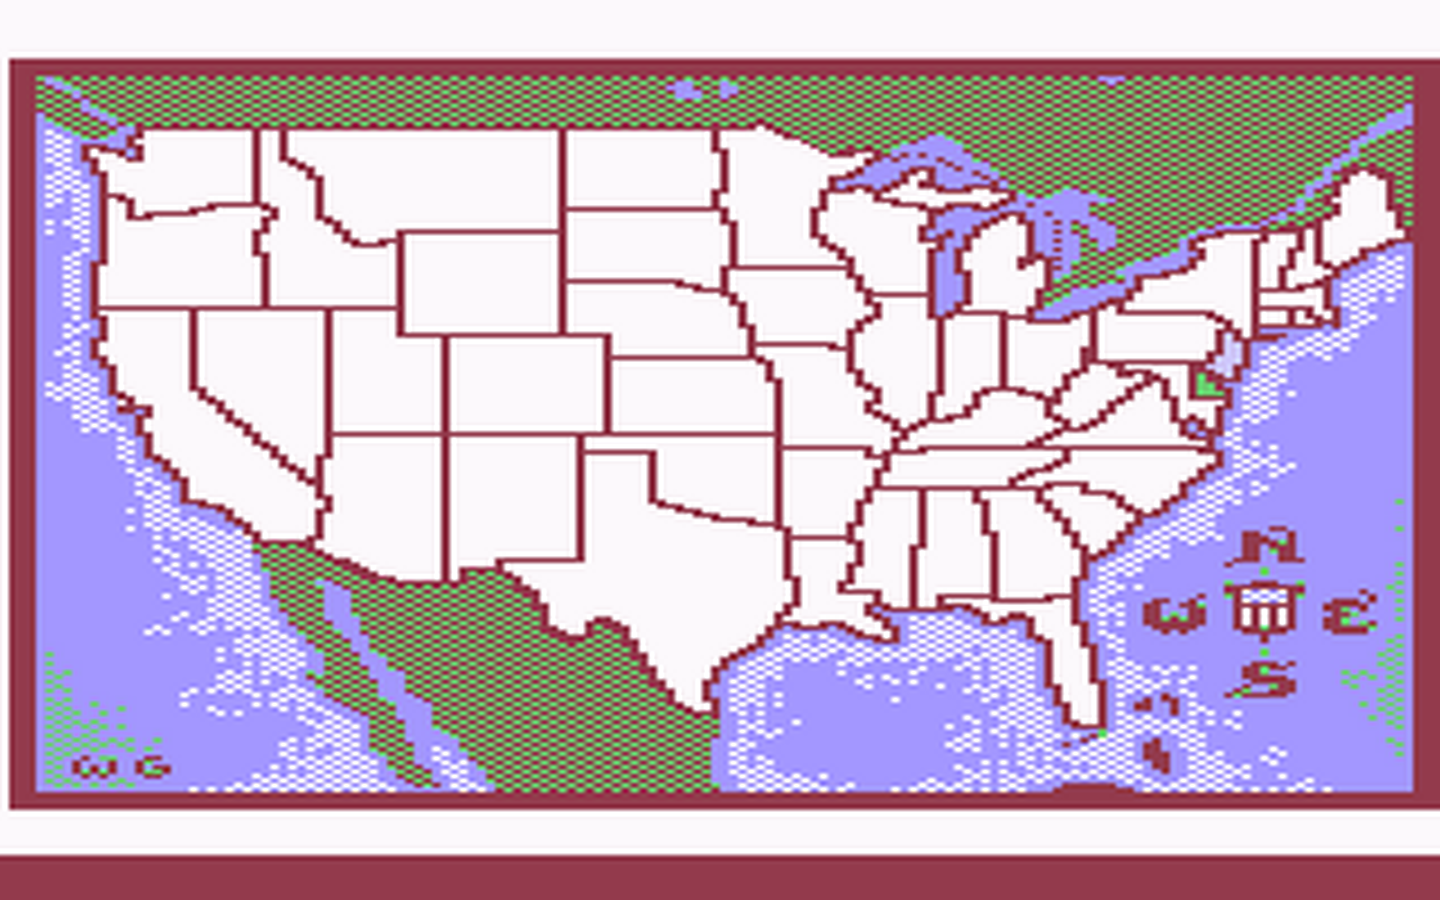 C64 GameBase United_States_Adventure First_Star_Software 1984